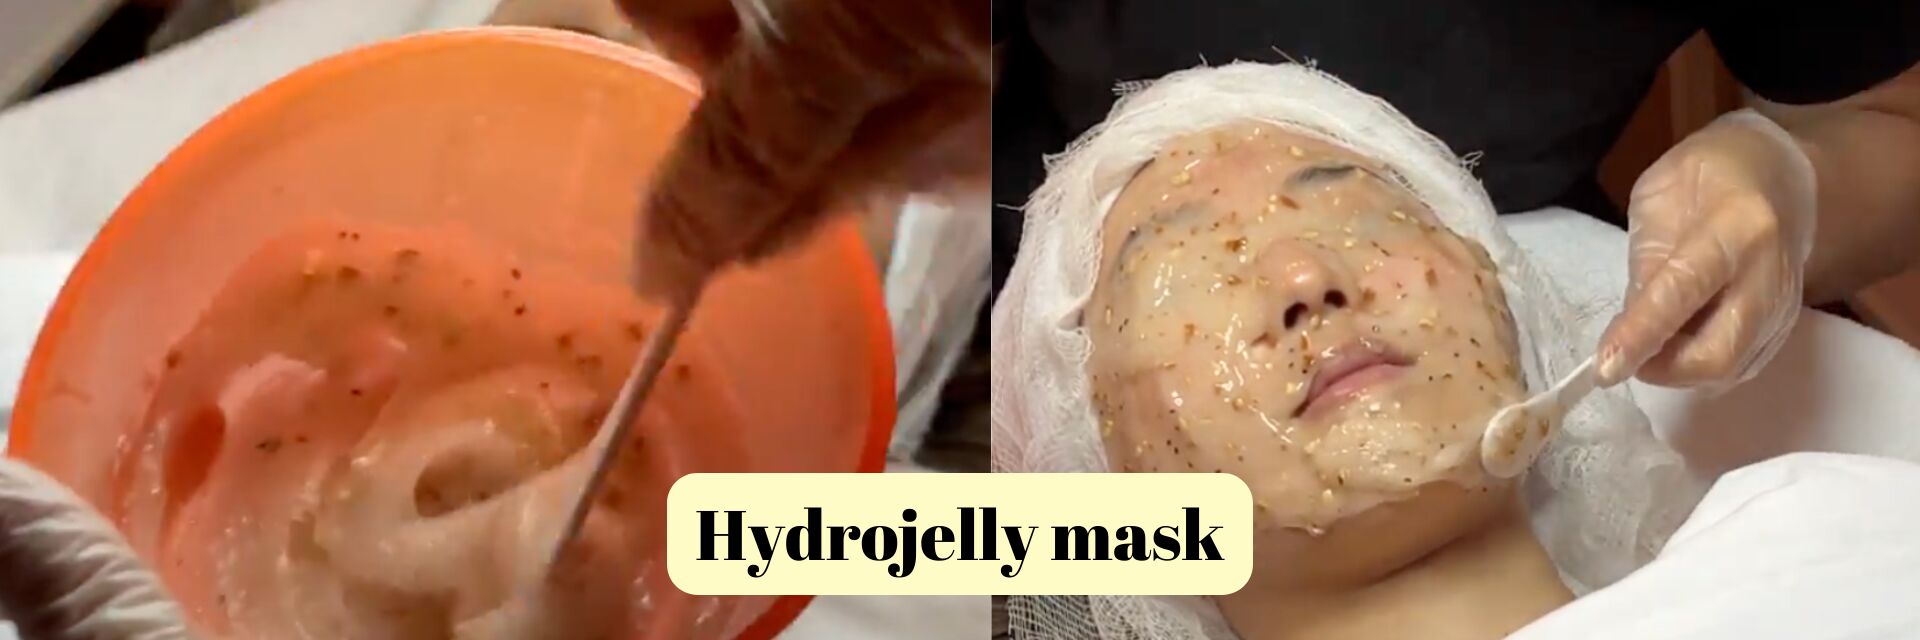 Hydrojelly mask